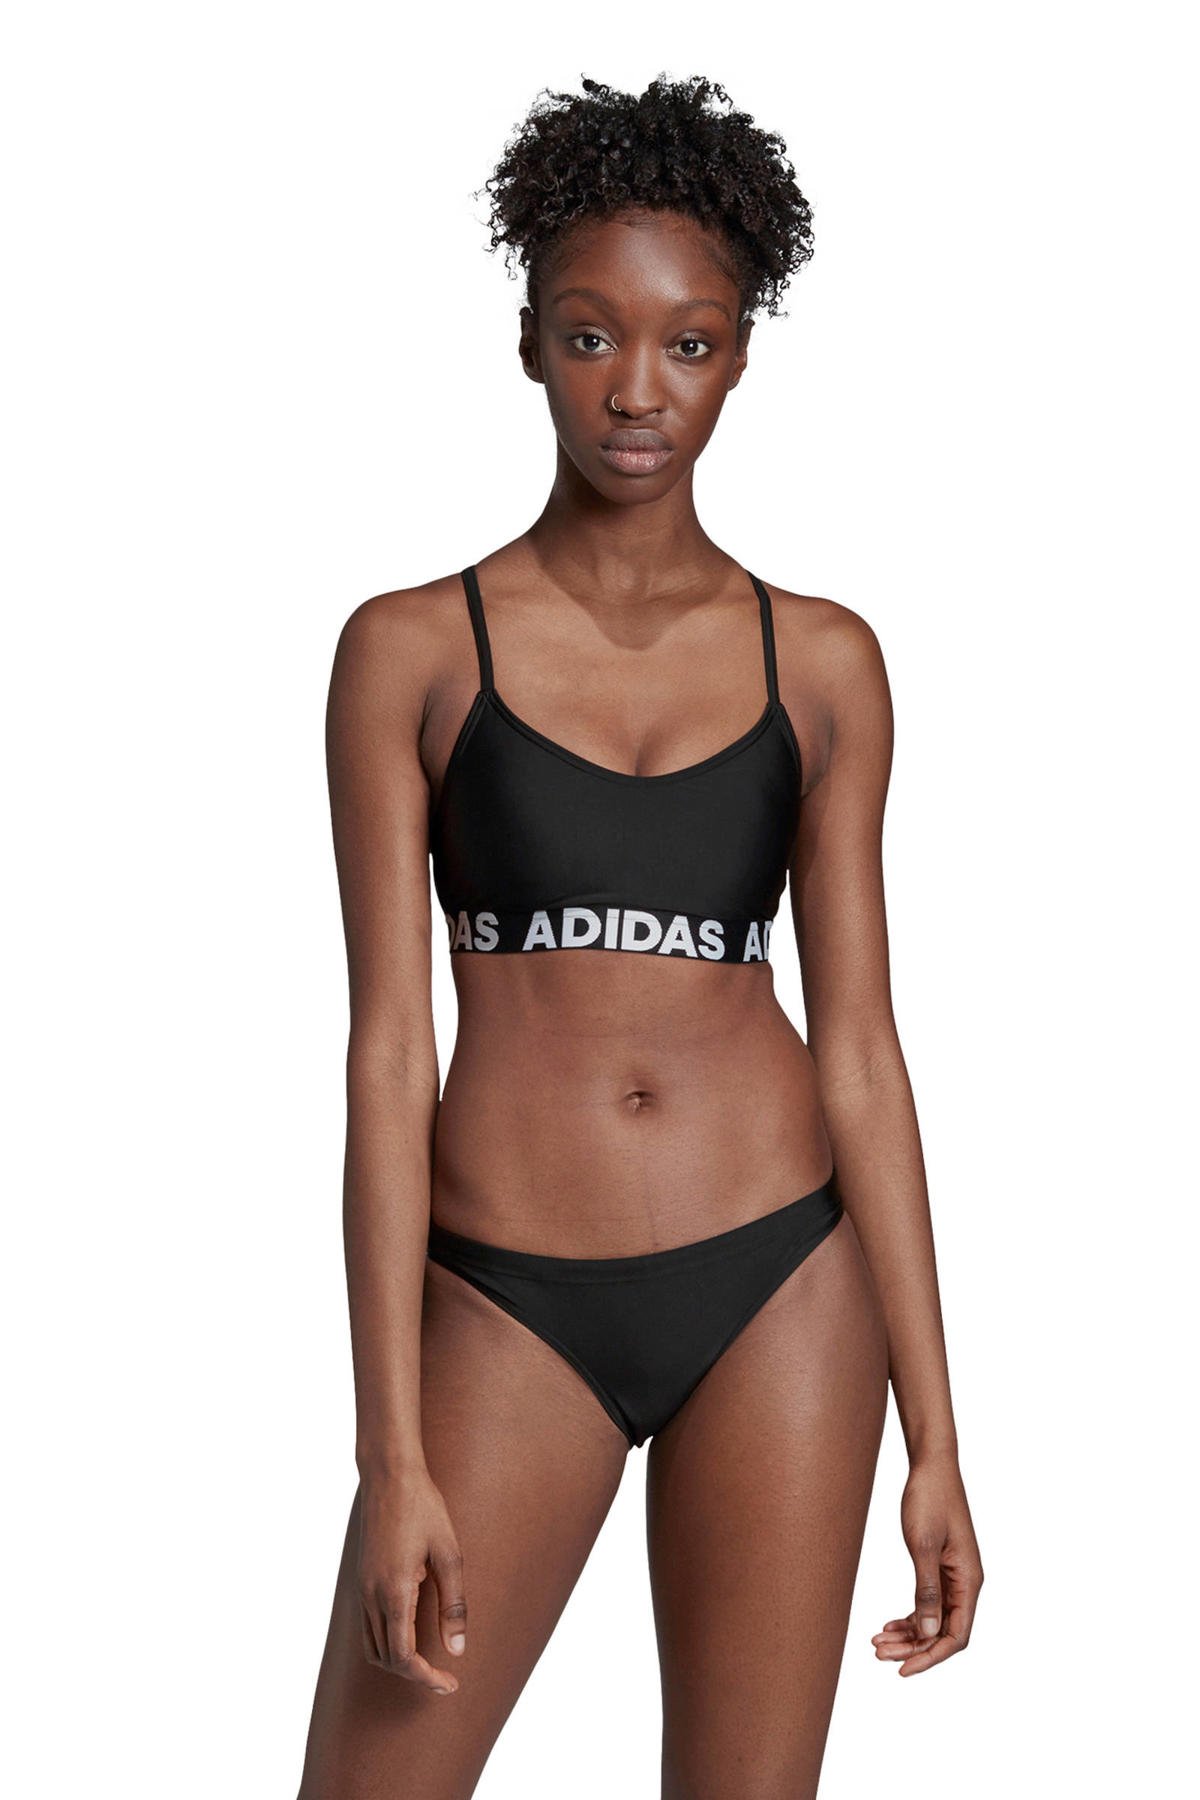 pit vleugel lid adidas Performance niet-voorgevormde bikini met merknaam zwart | wehkamp